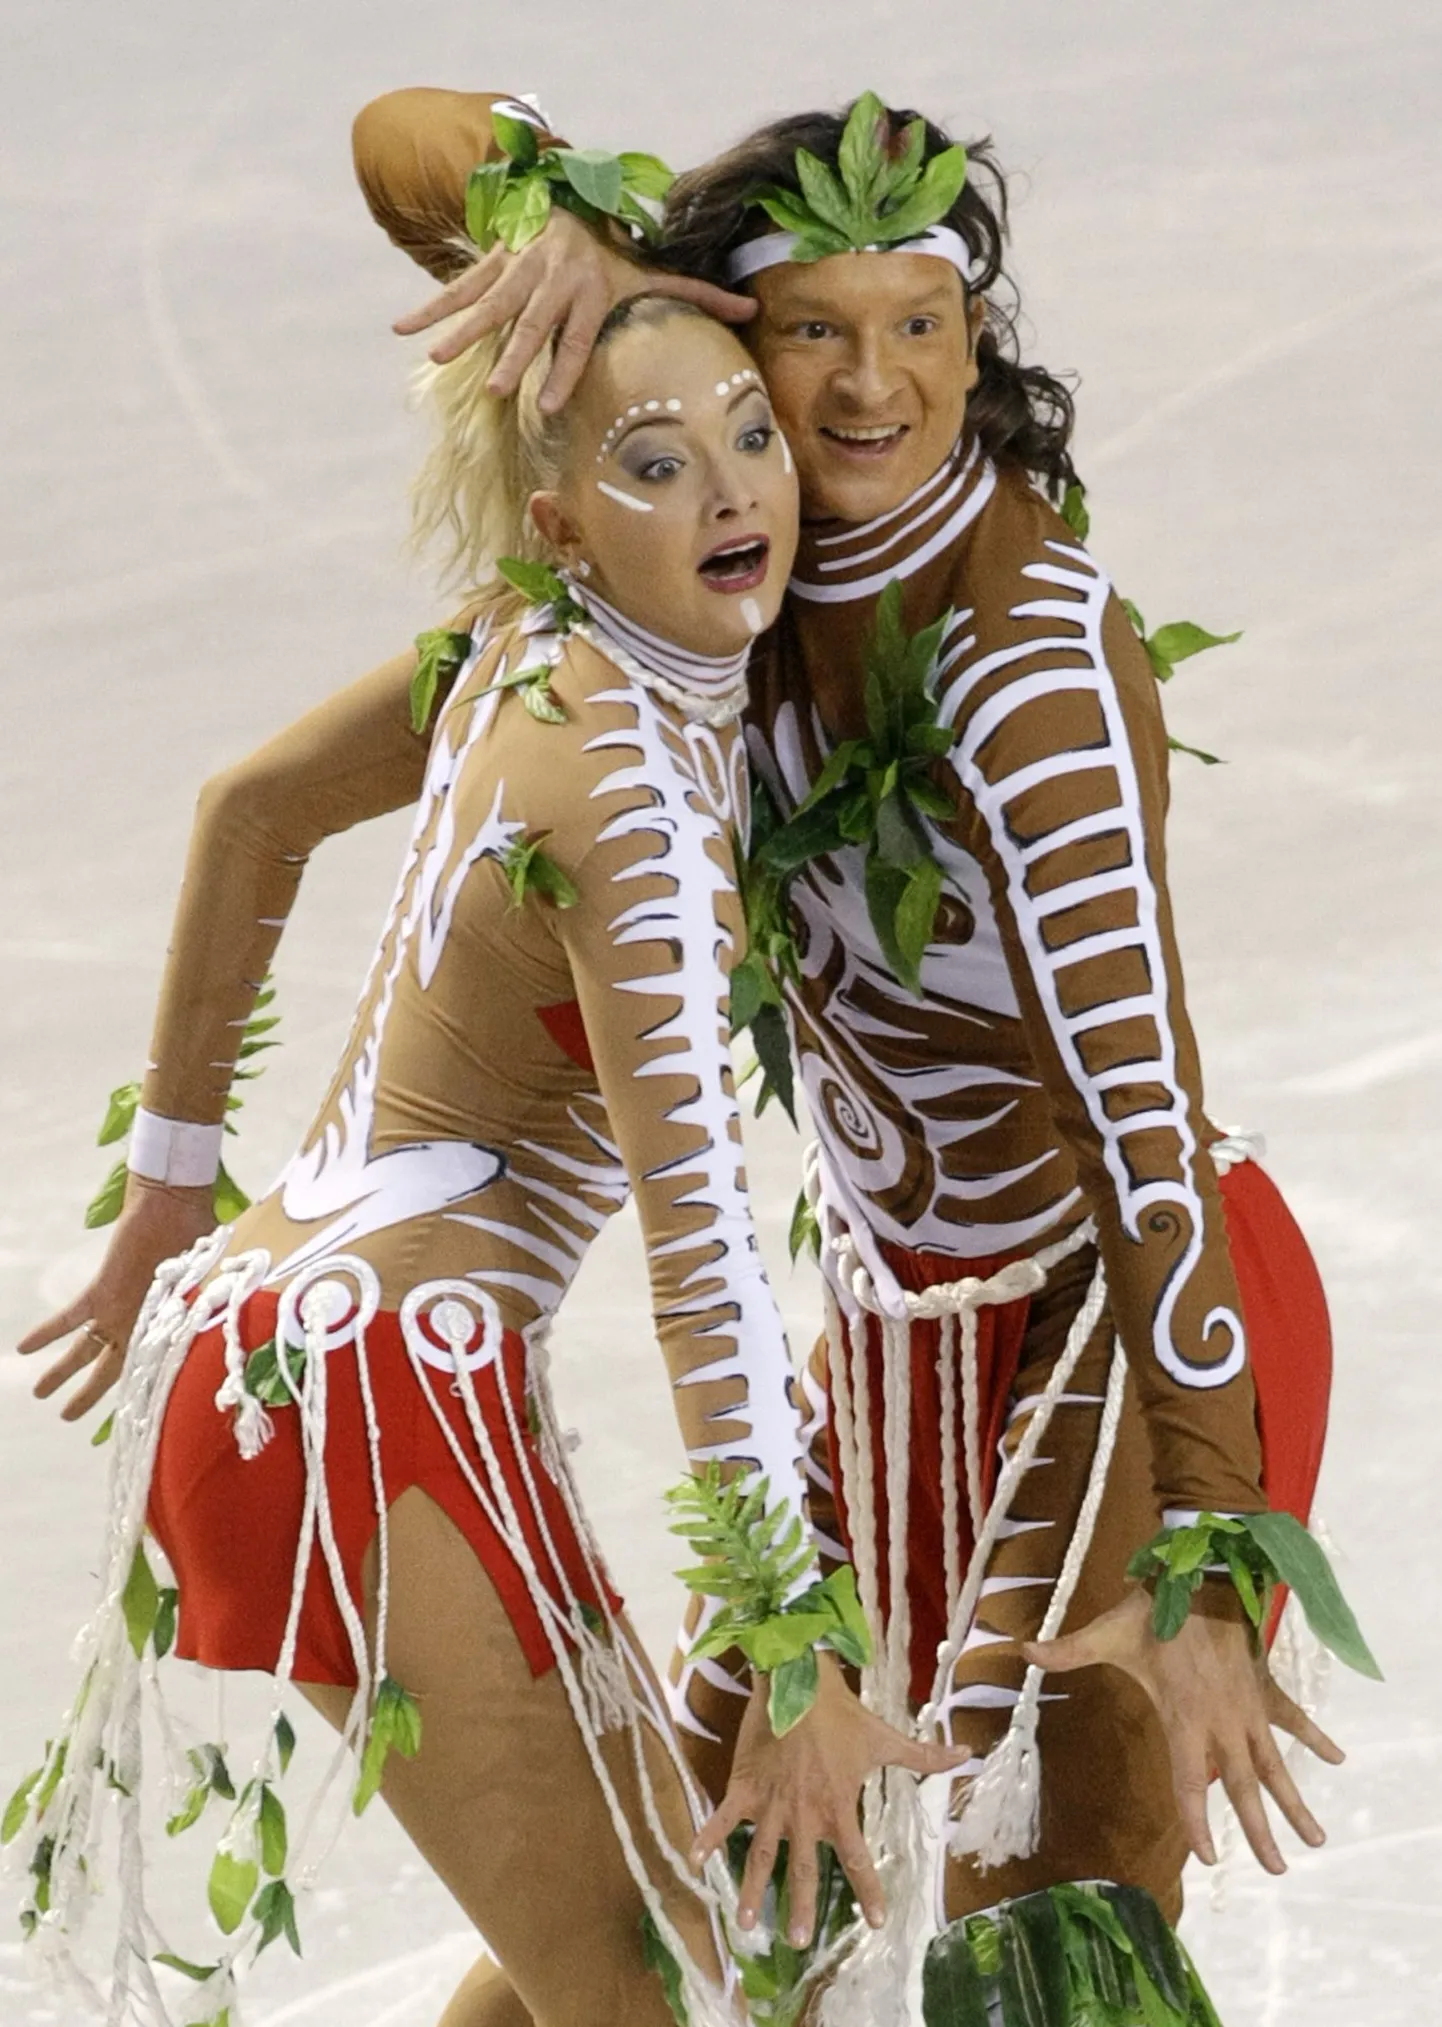 Домнина и Шабалин на таллиннском льду исполняют "Танец аборигенов".